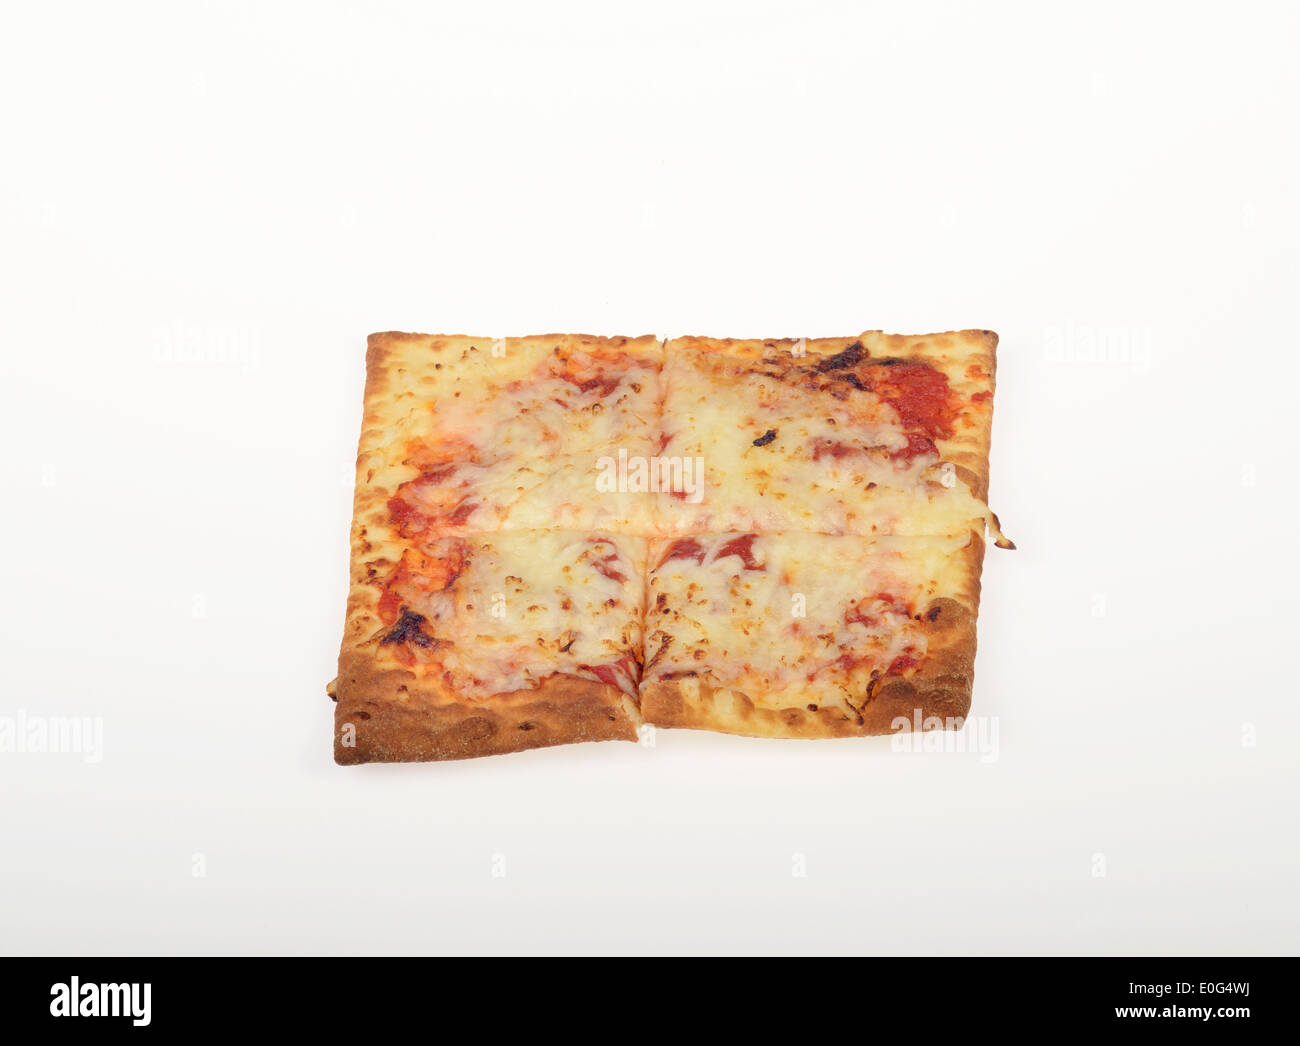 Subway take-out Flatizza cheese pizza square slice on white background, cutout. USA Stock Photo